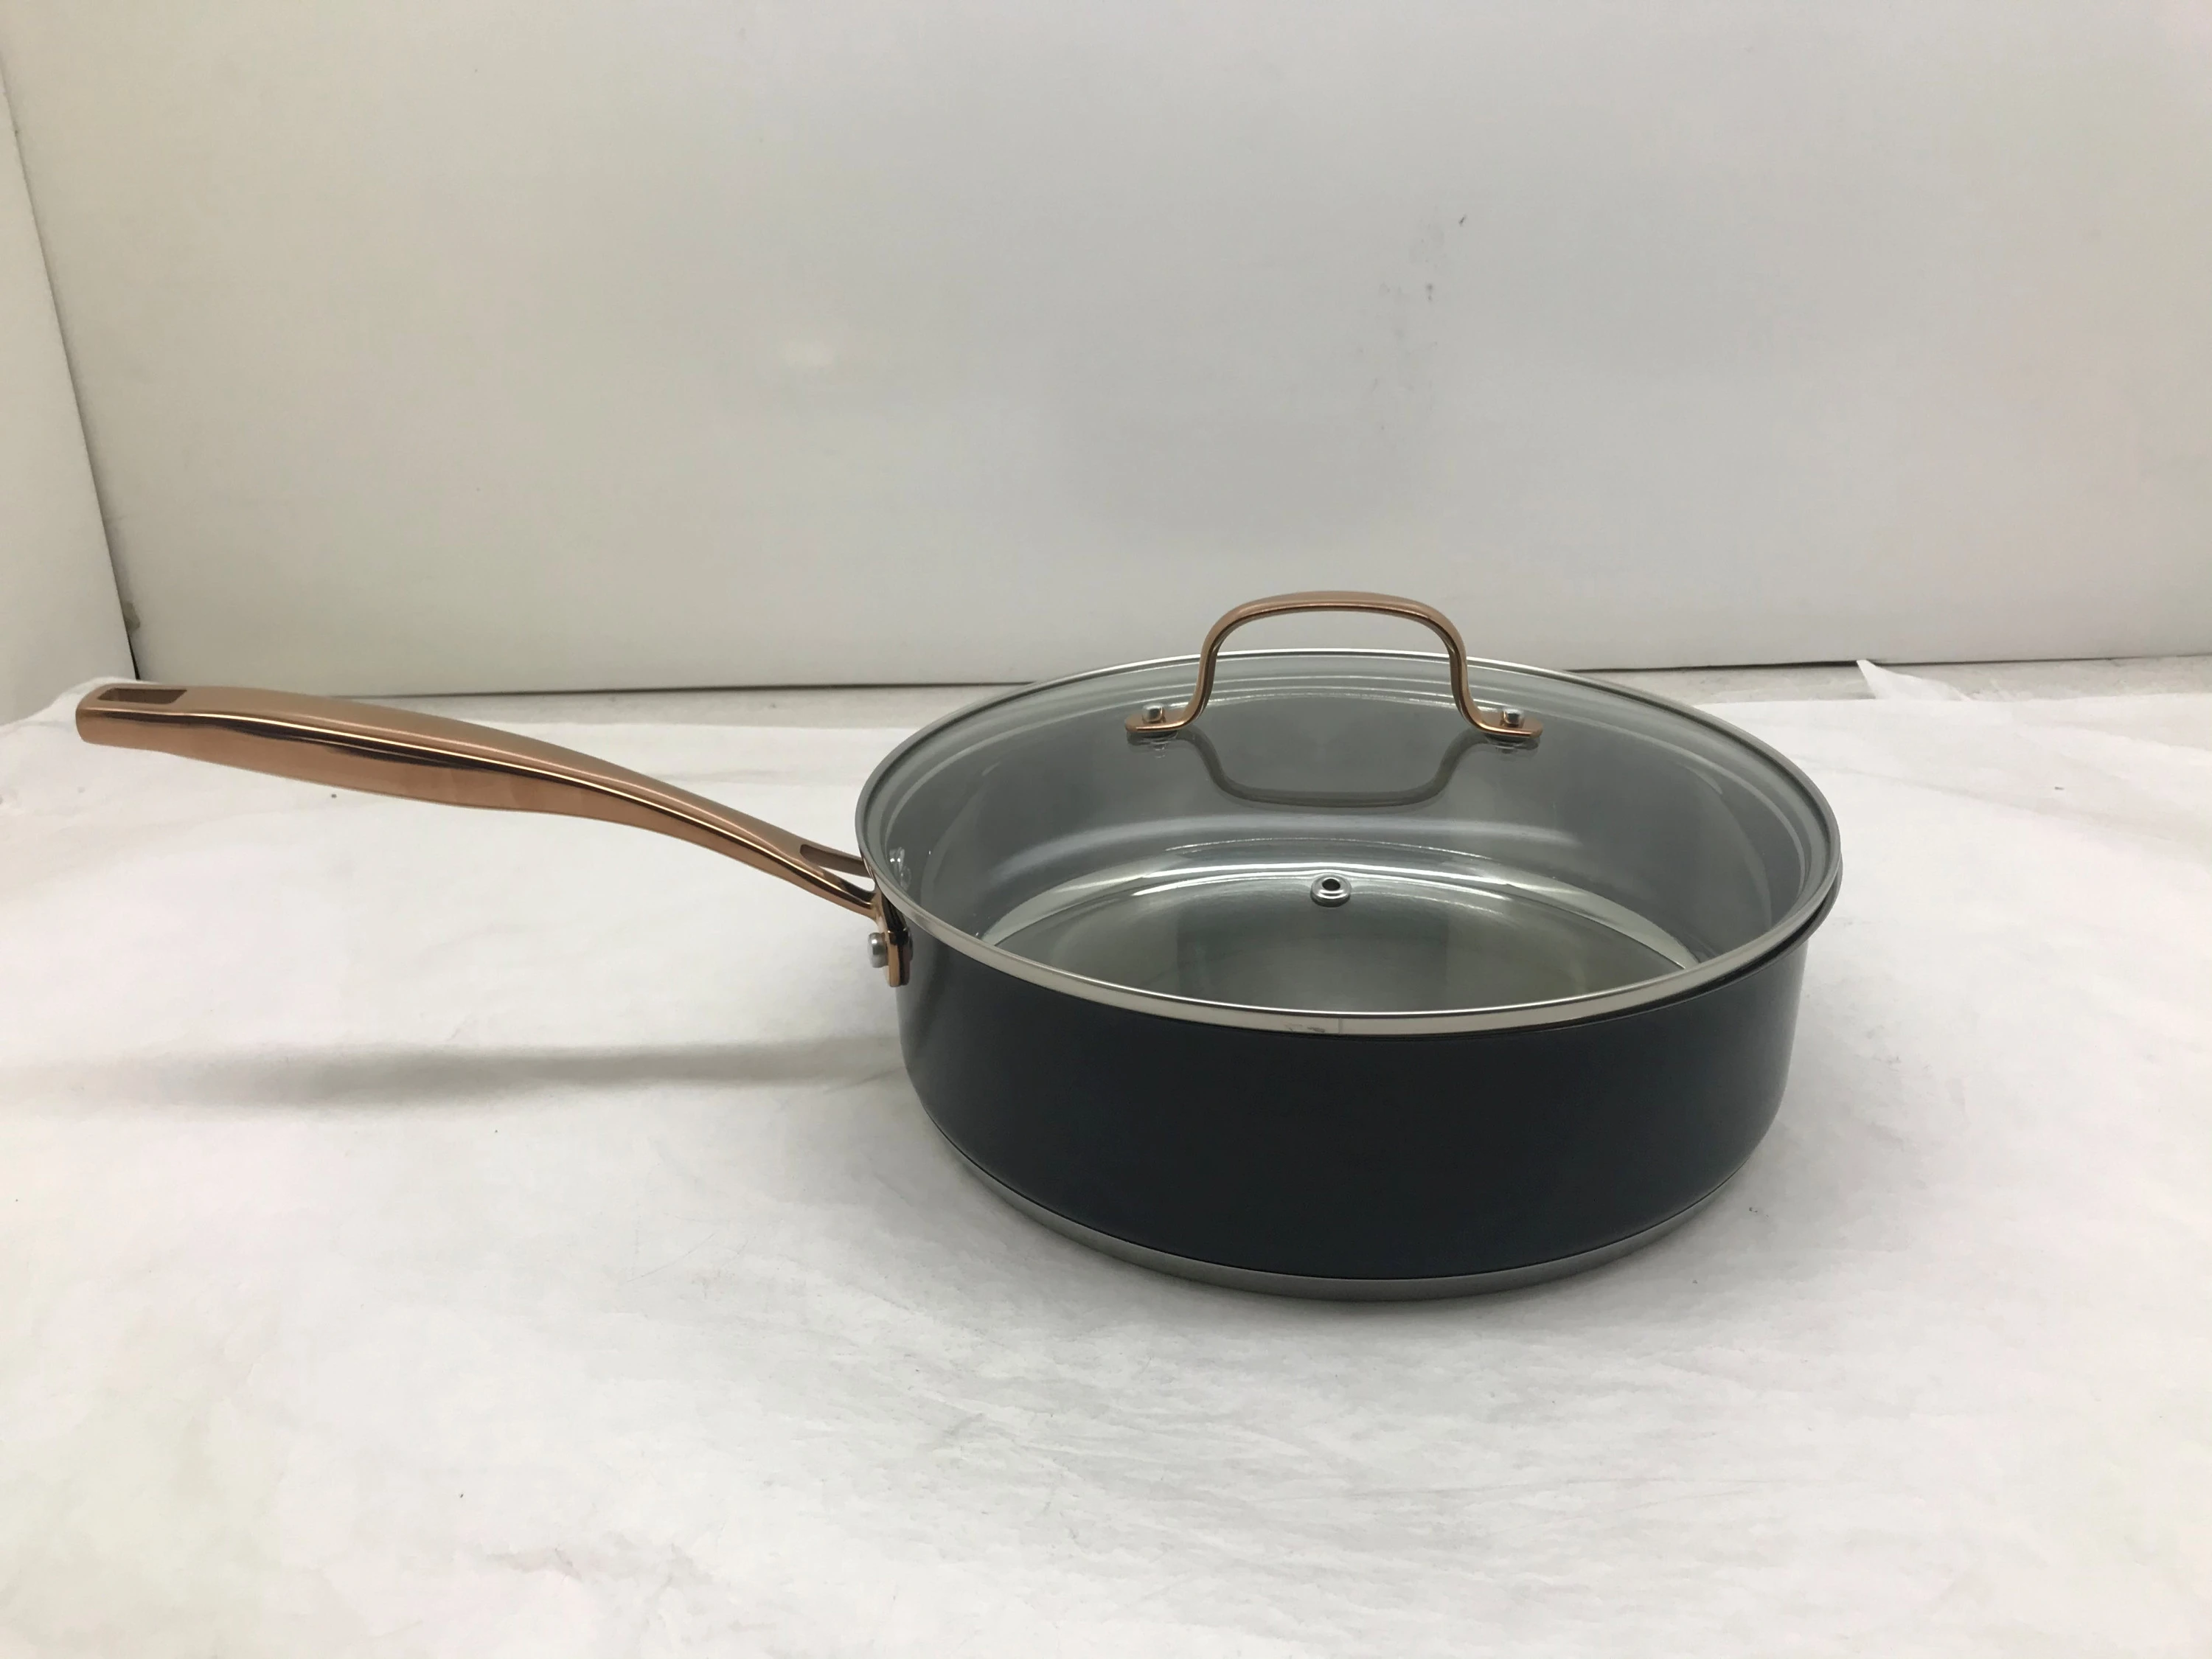 Cookware Stock Pot, Sauce Pot, Sauce Pan and More Stainless Steel for Restaurant Soup &amp; Stock Pots Cooking Pot Set Metal Kitchen